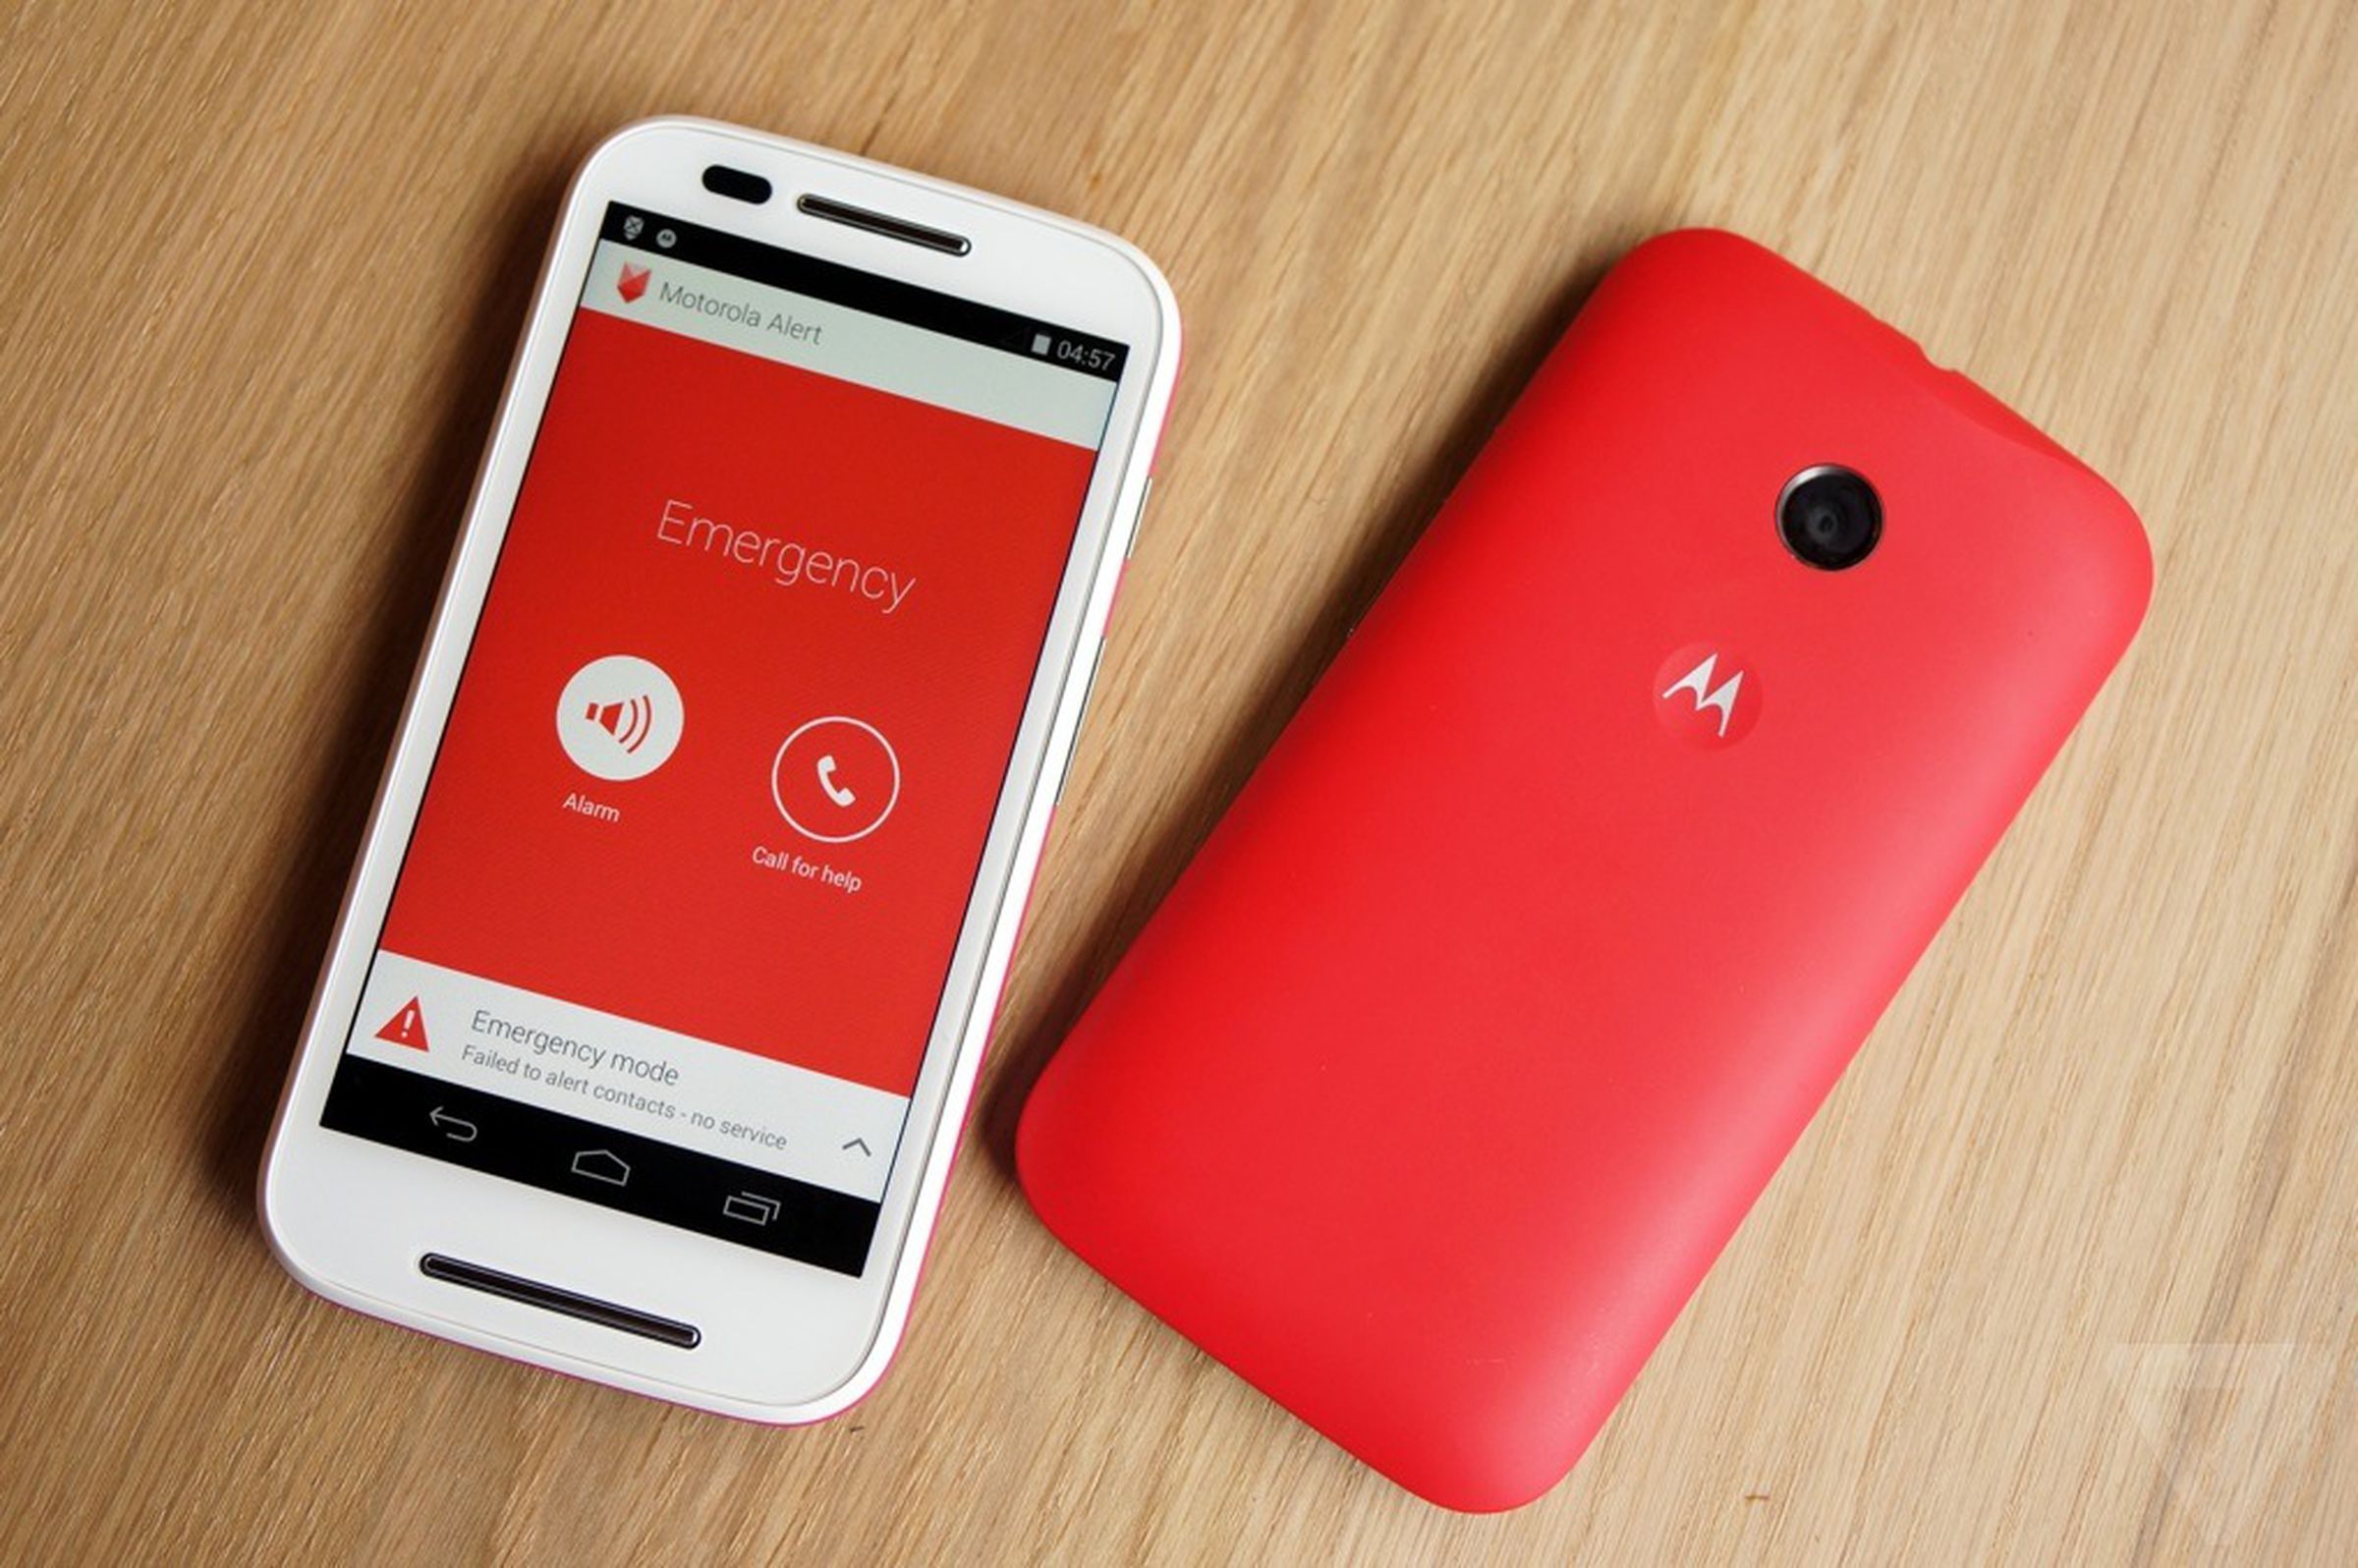 Motorola Moto E hands-on pictures